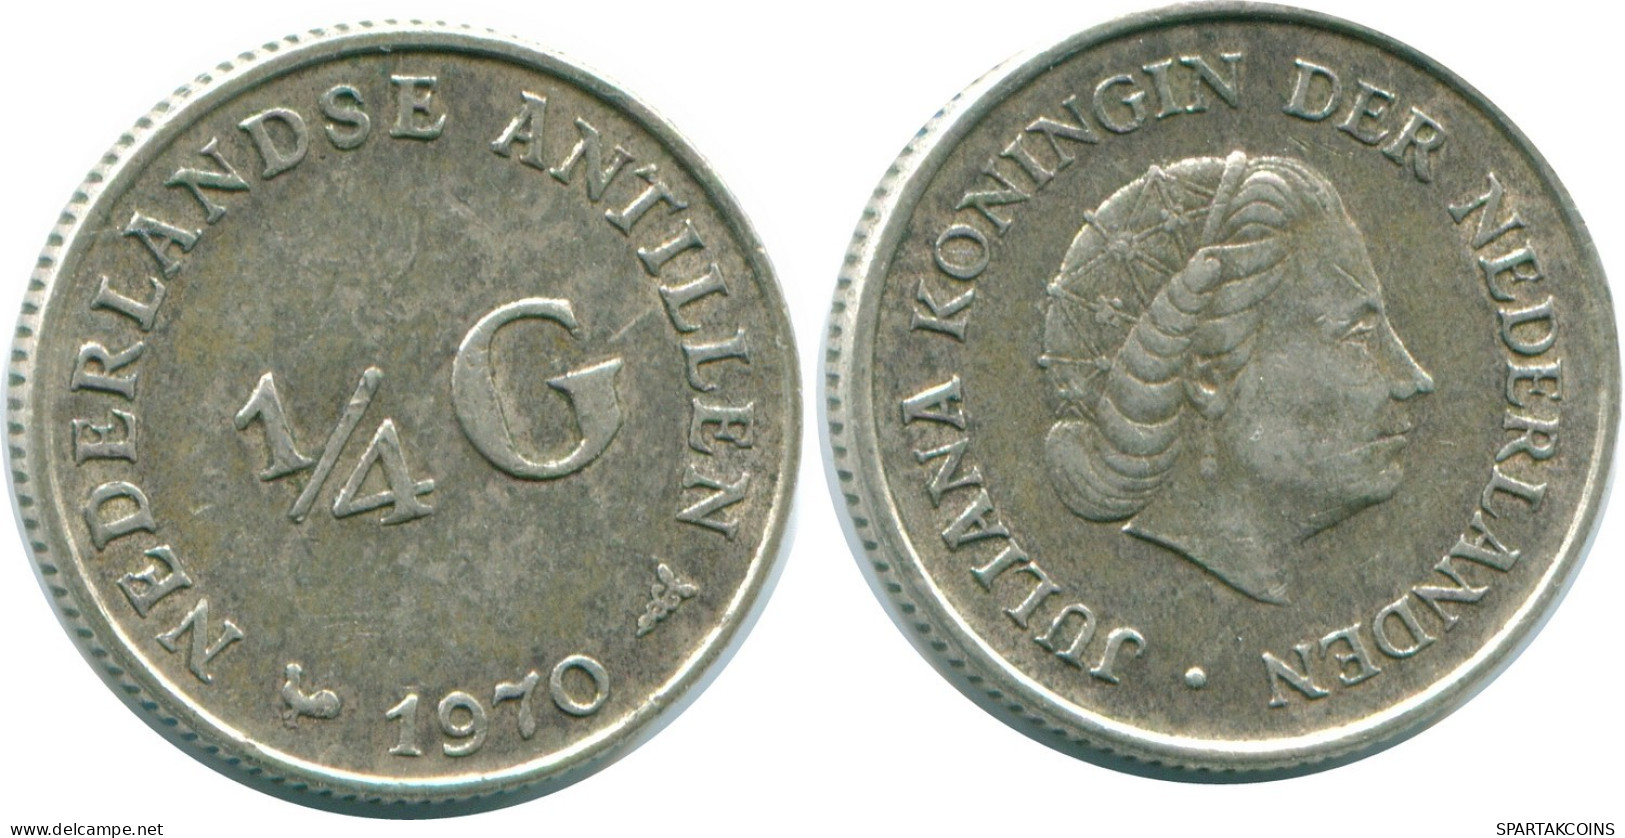 1/4 GULDEN 1970 NETHERLANDS ANTILLES SILVER Colonial Coin #NL11724.4.U.A - Netherlands Antilles